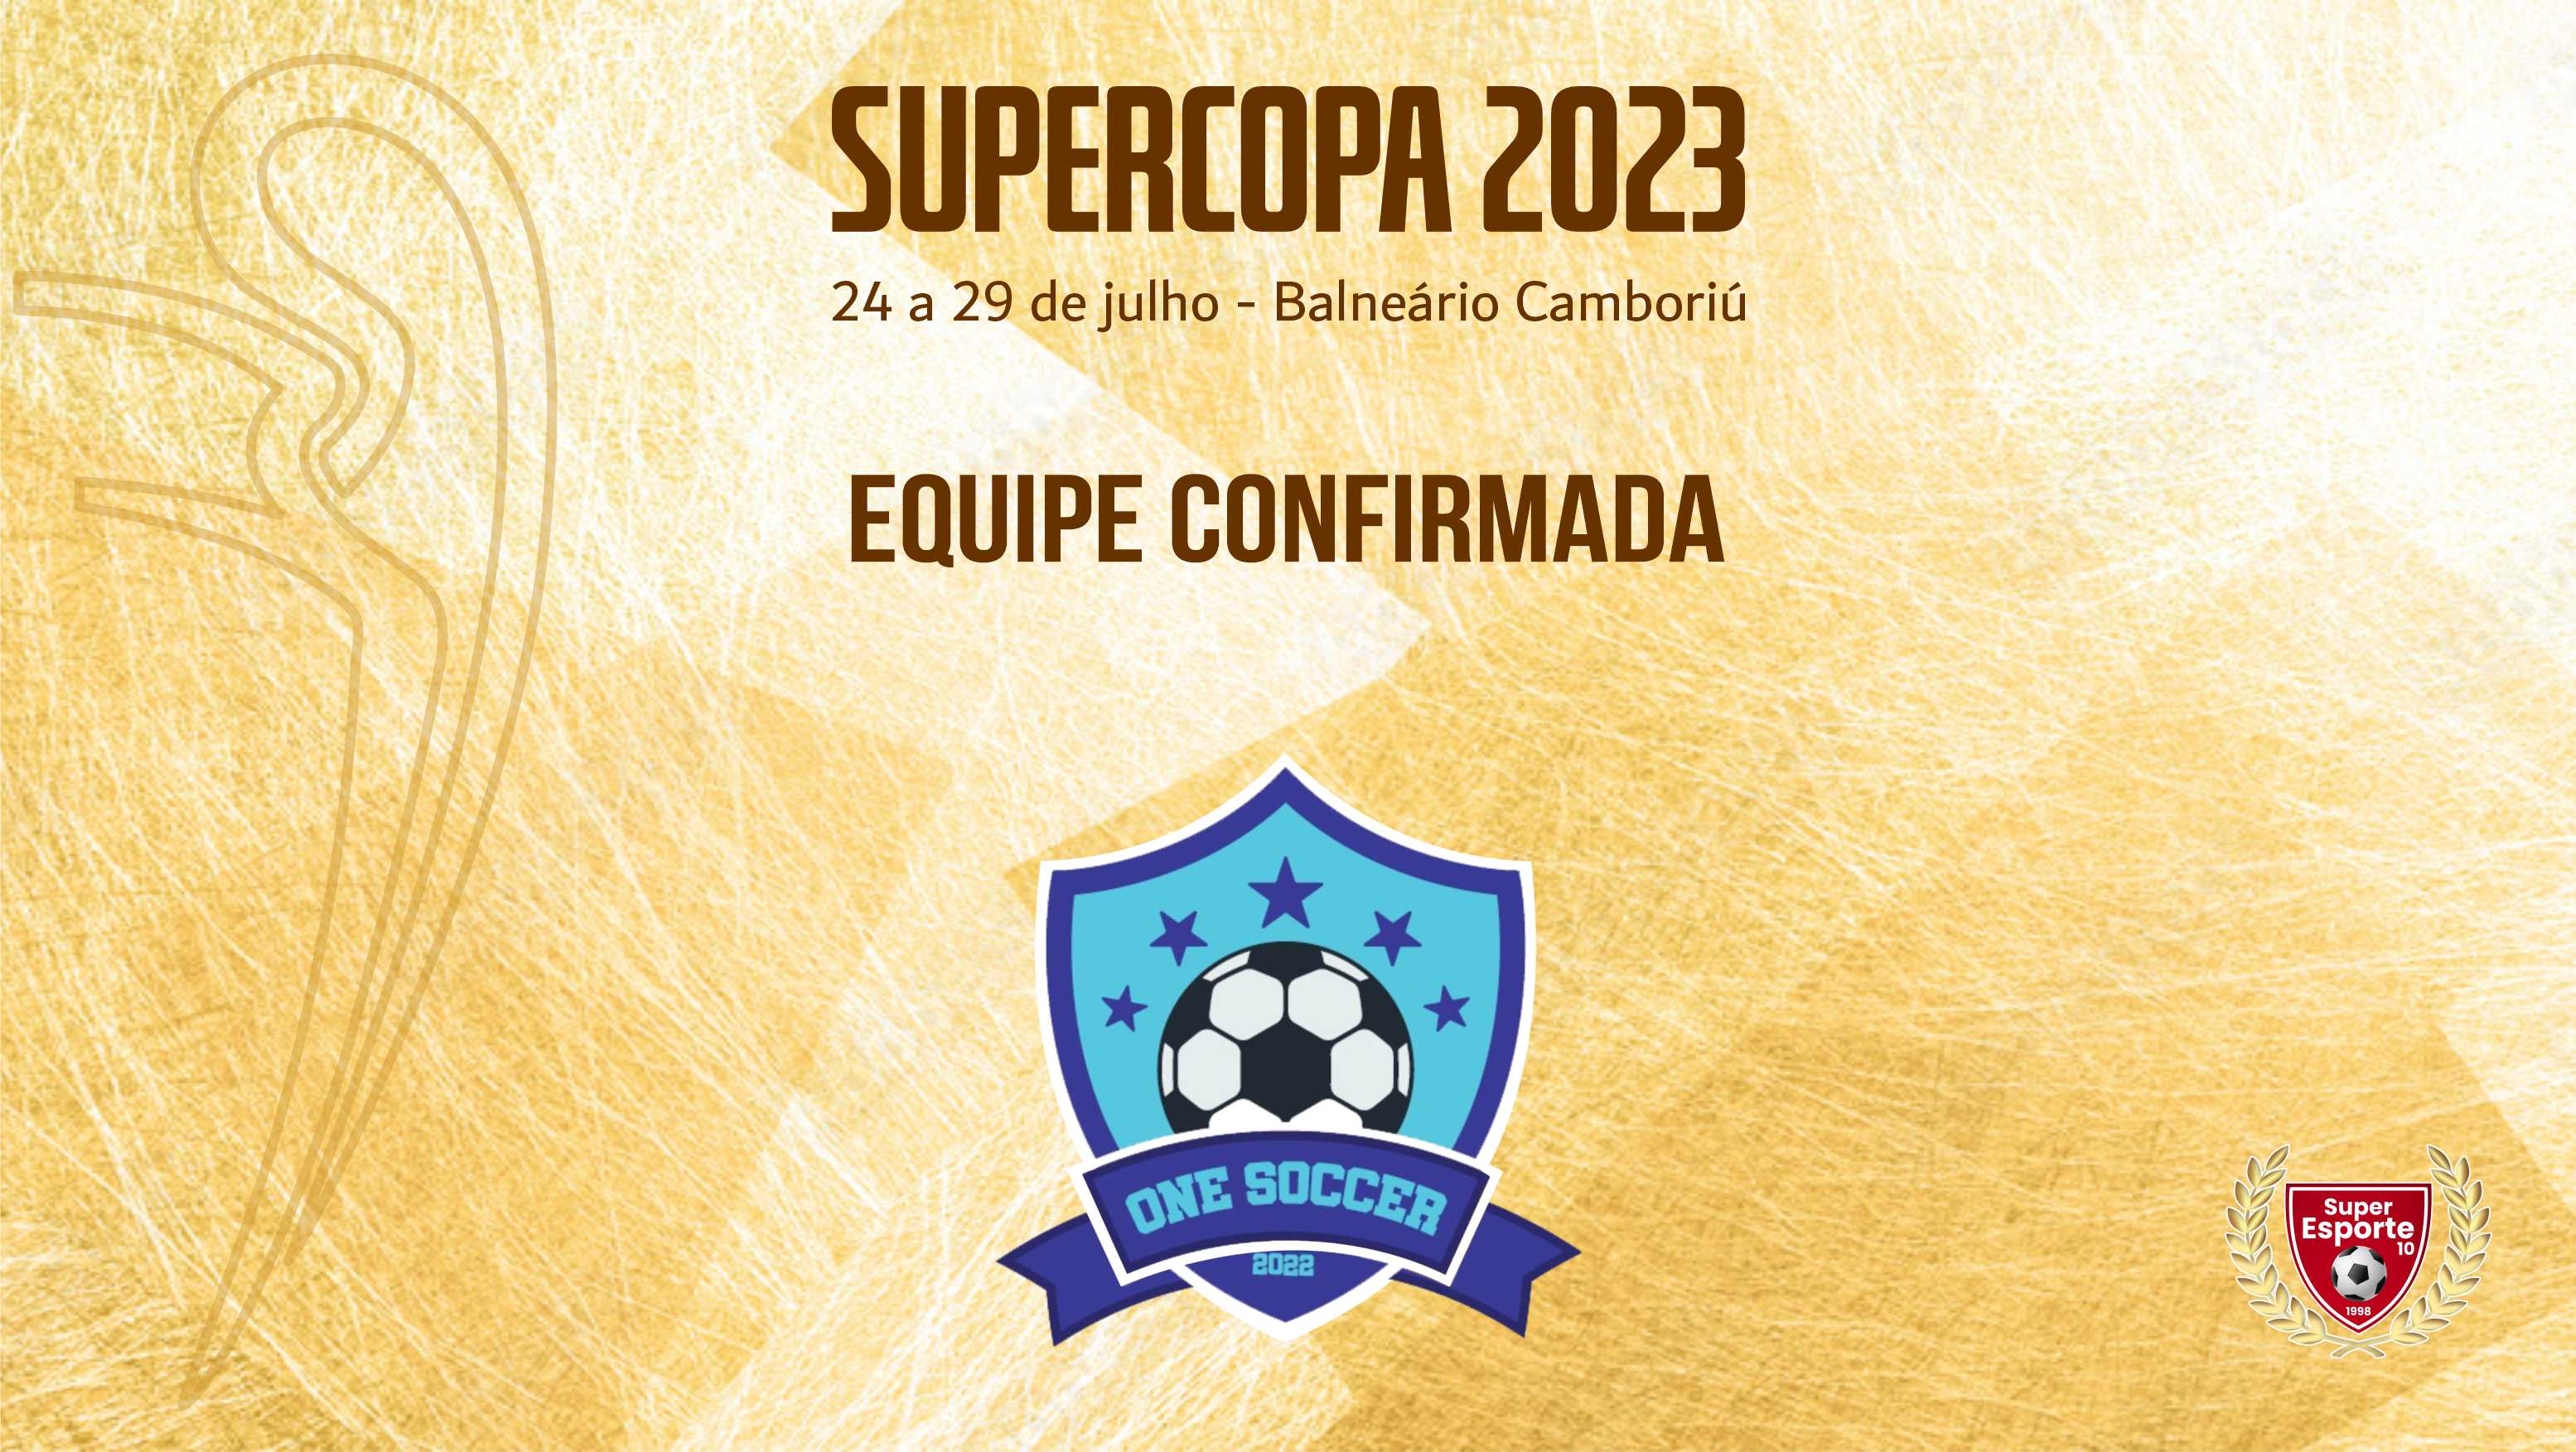 One Soccer, de São Paulo, presente na Supercopa